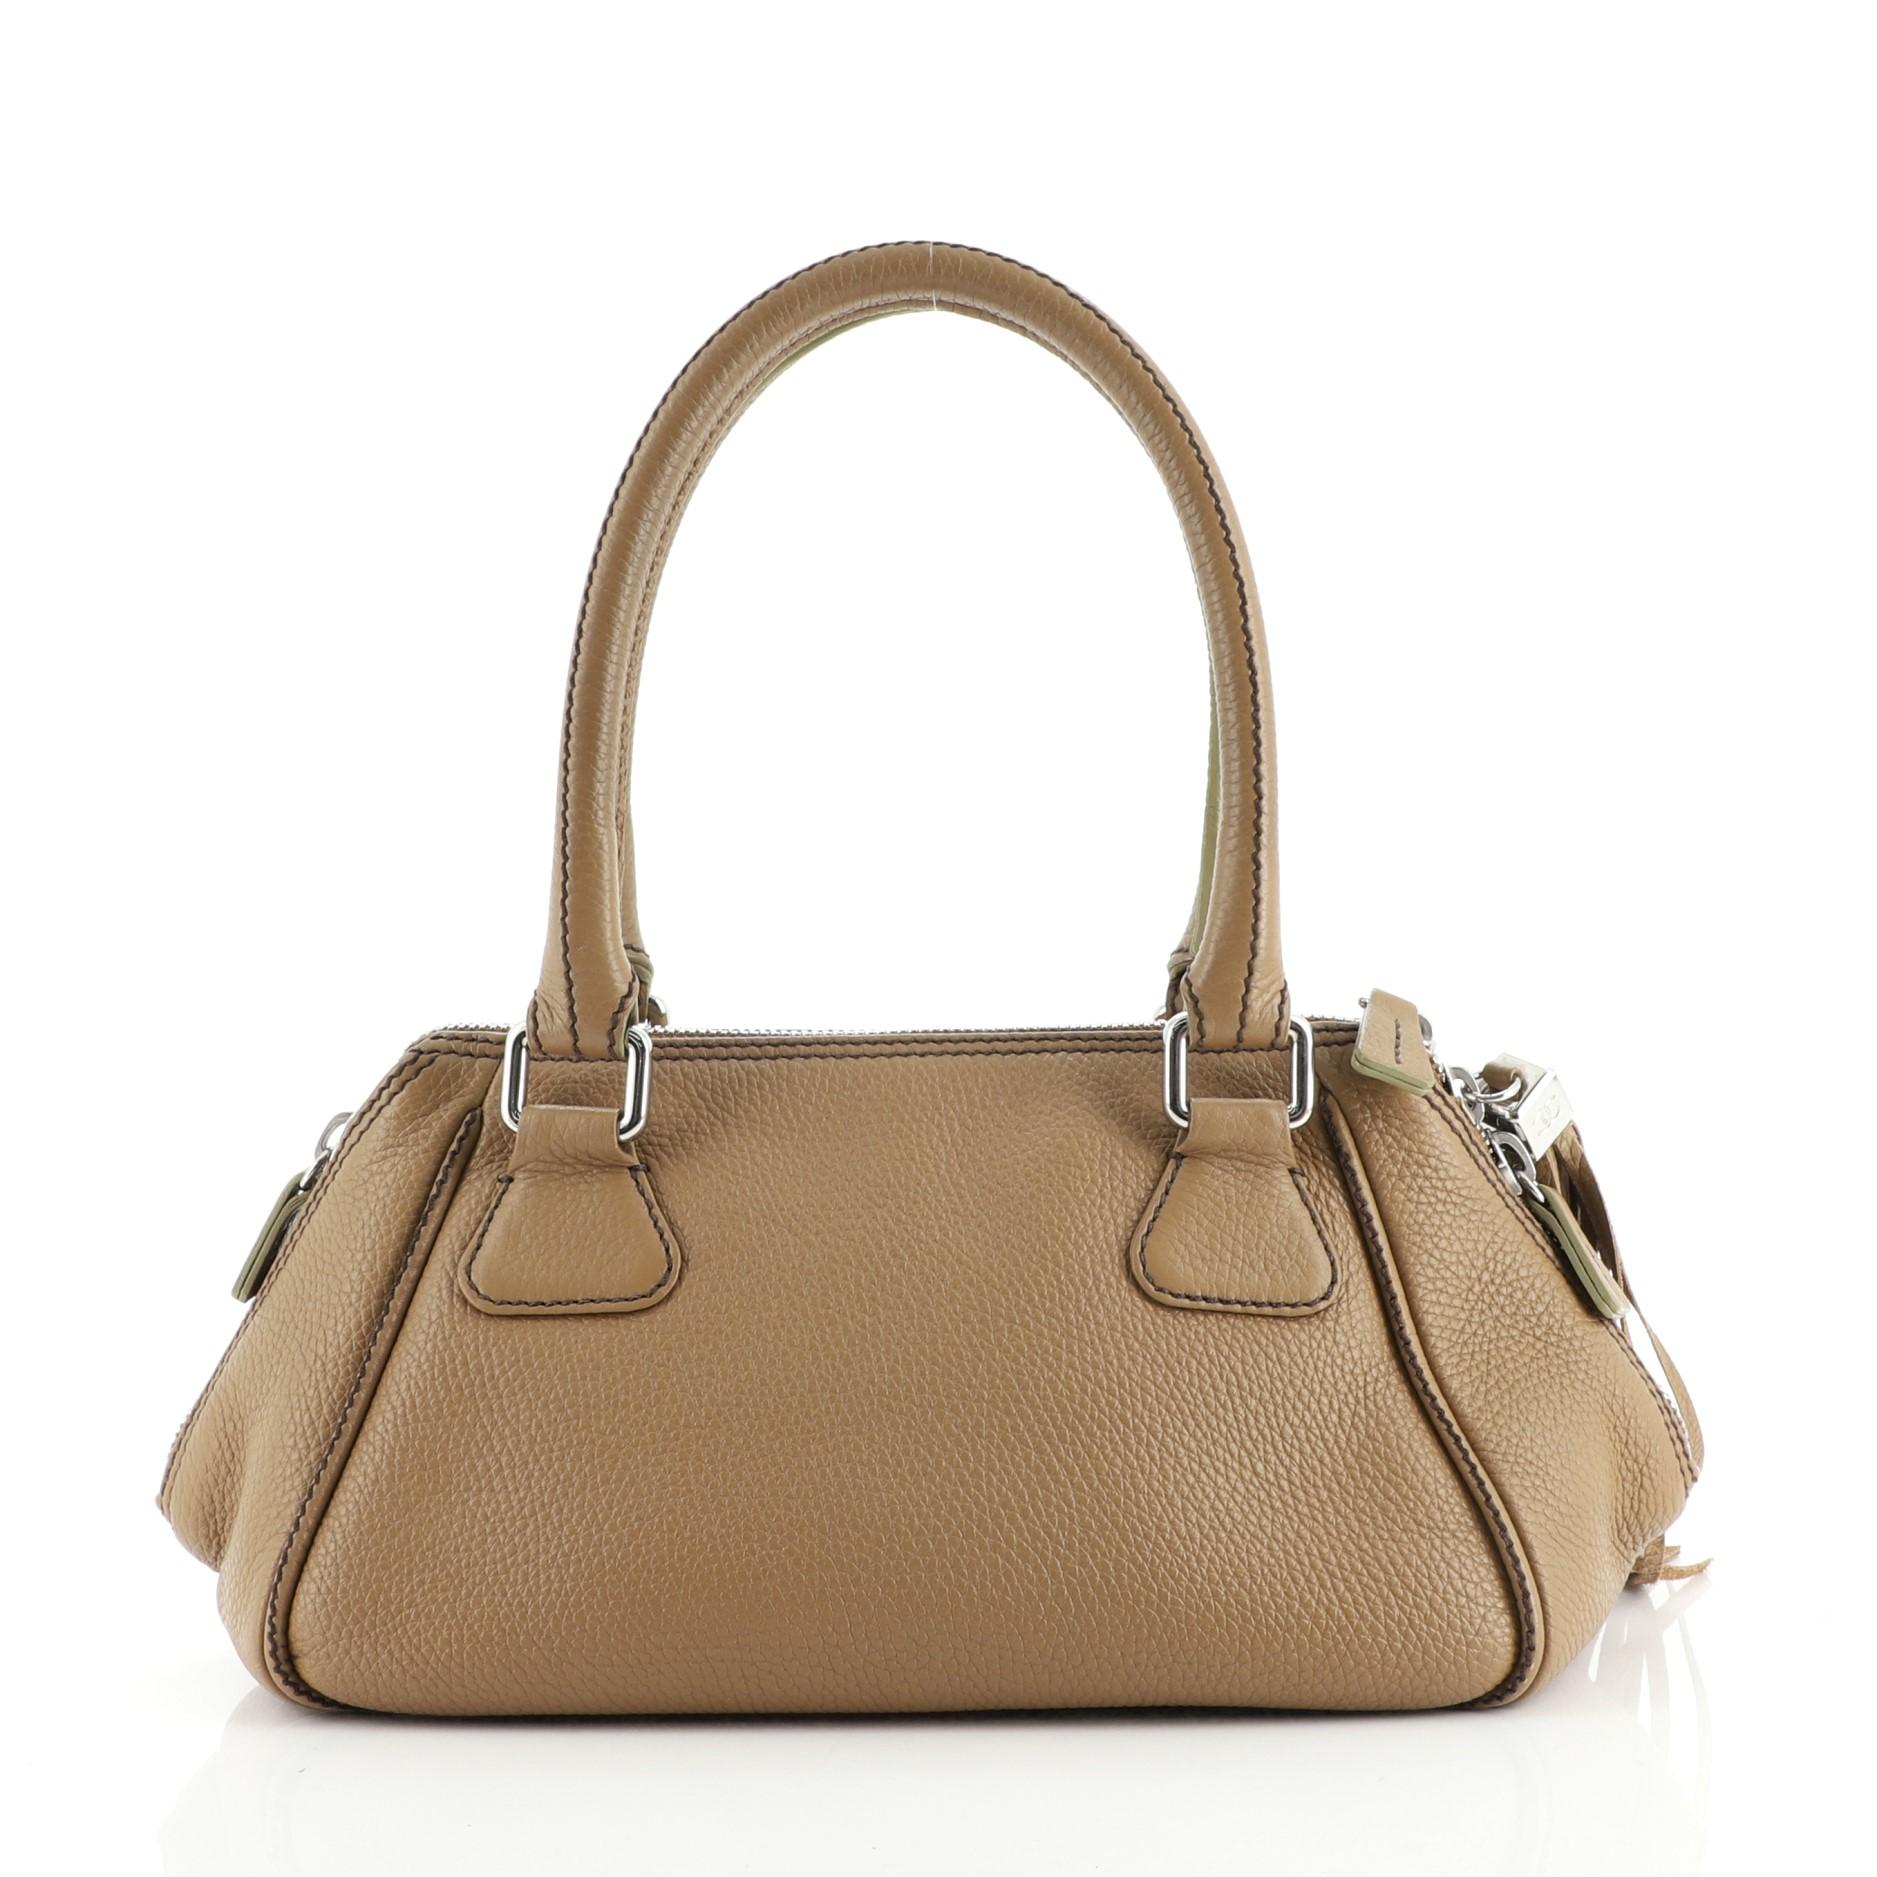 Brown Chanel Lax Tassel Bag Pebbled Leather Medium